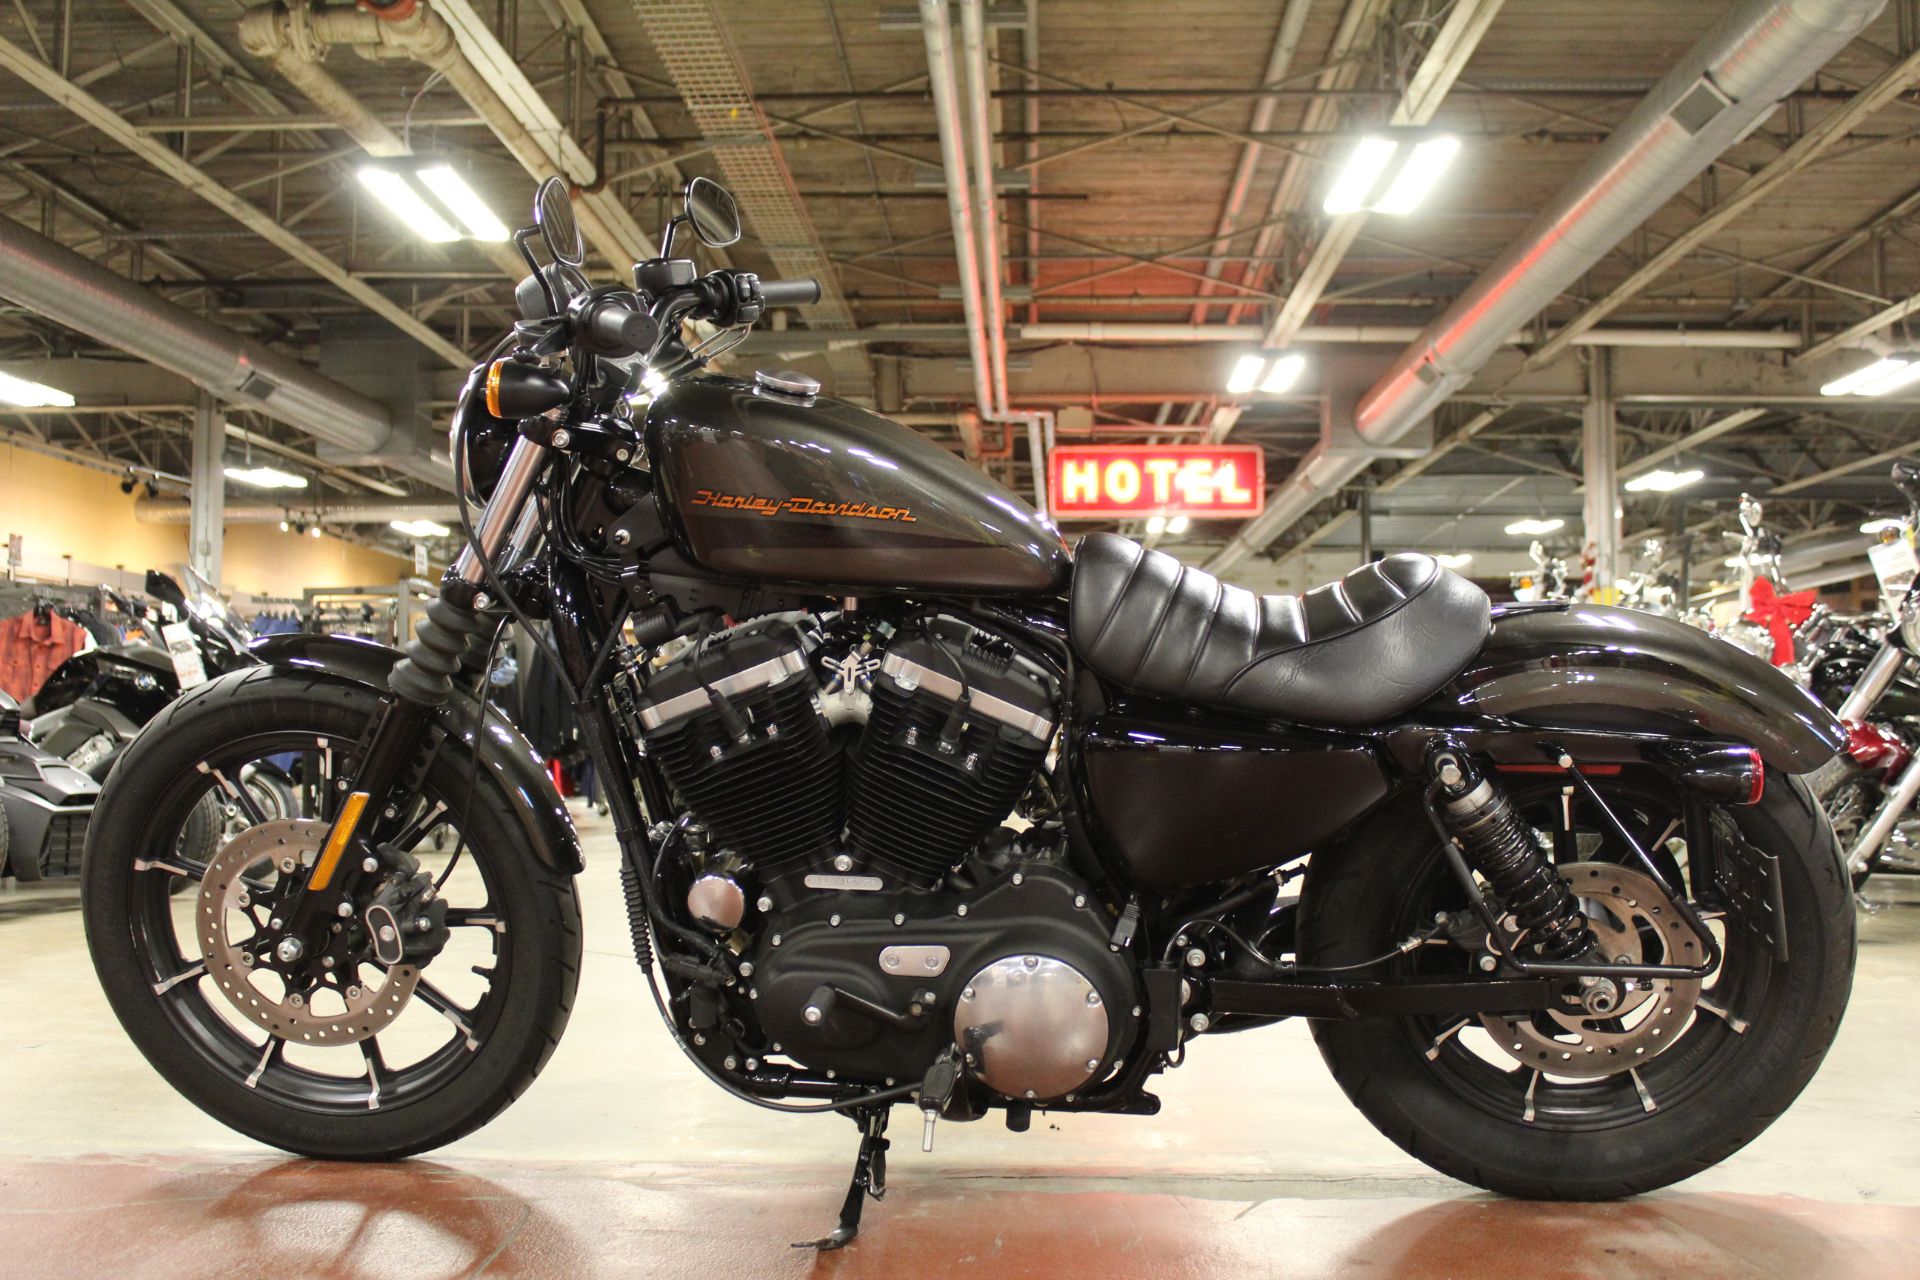 2019 Harley-Davidson Iron 883™ in New London, Connecticut - Photo 5